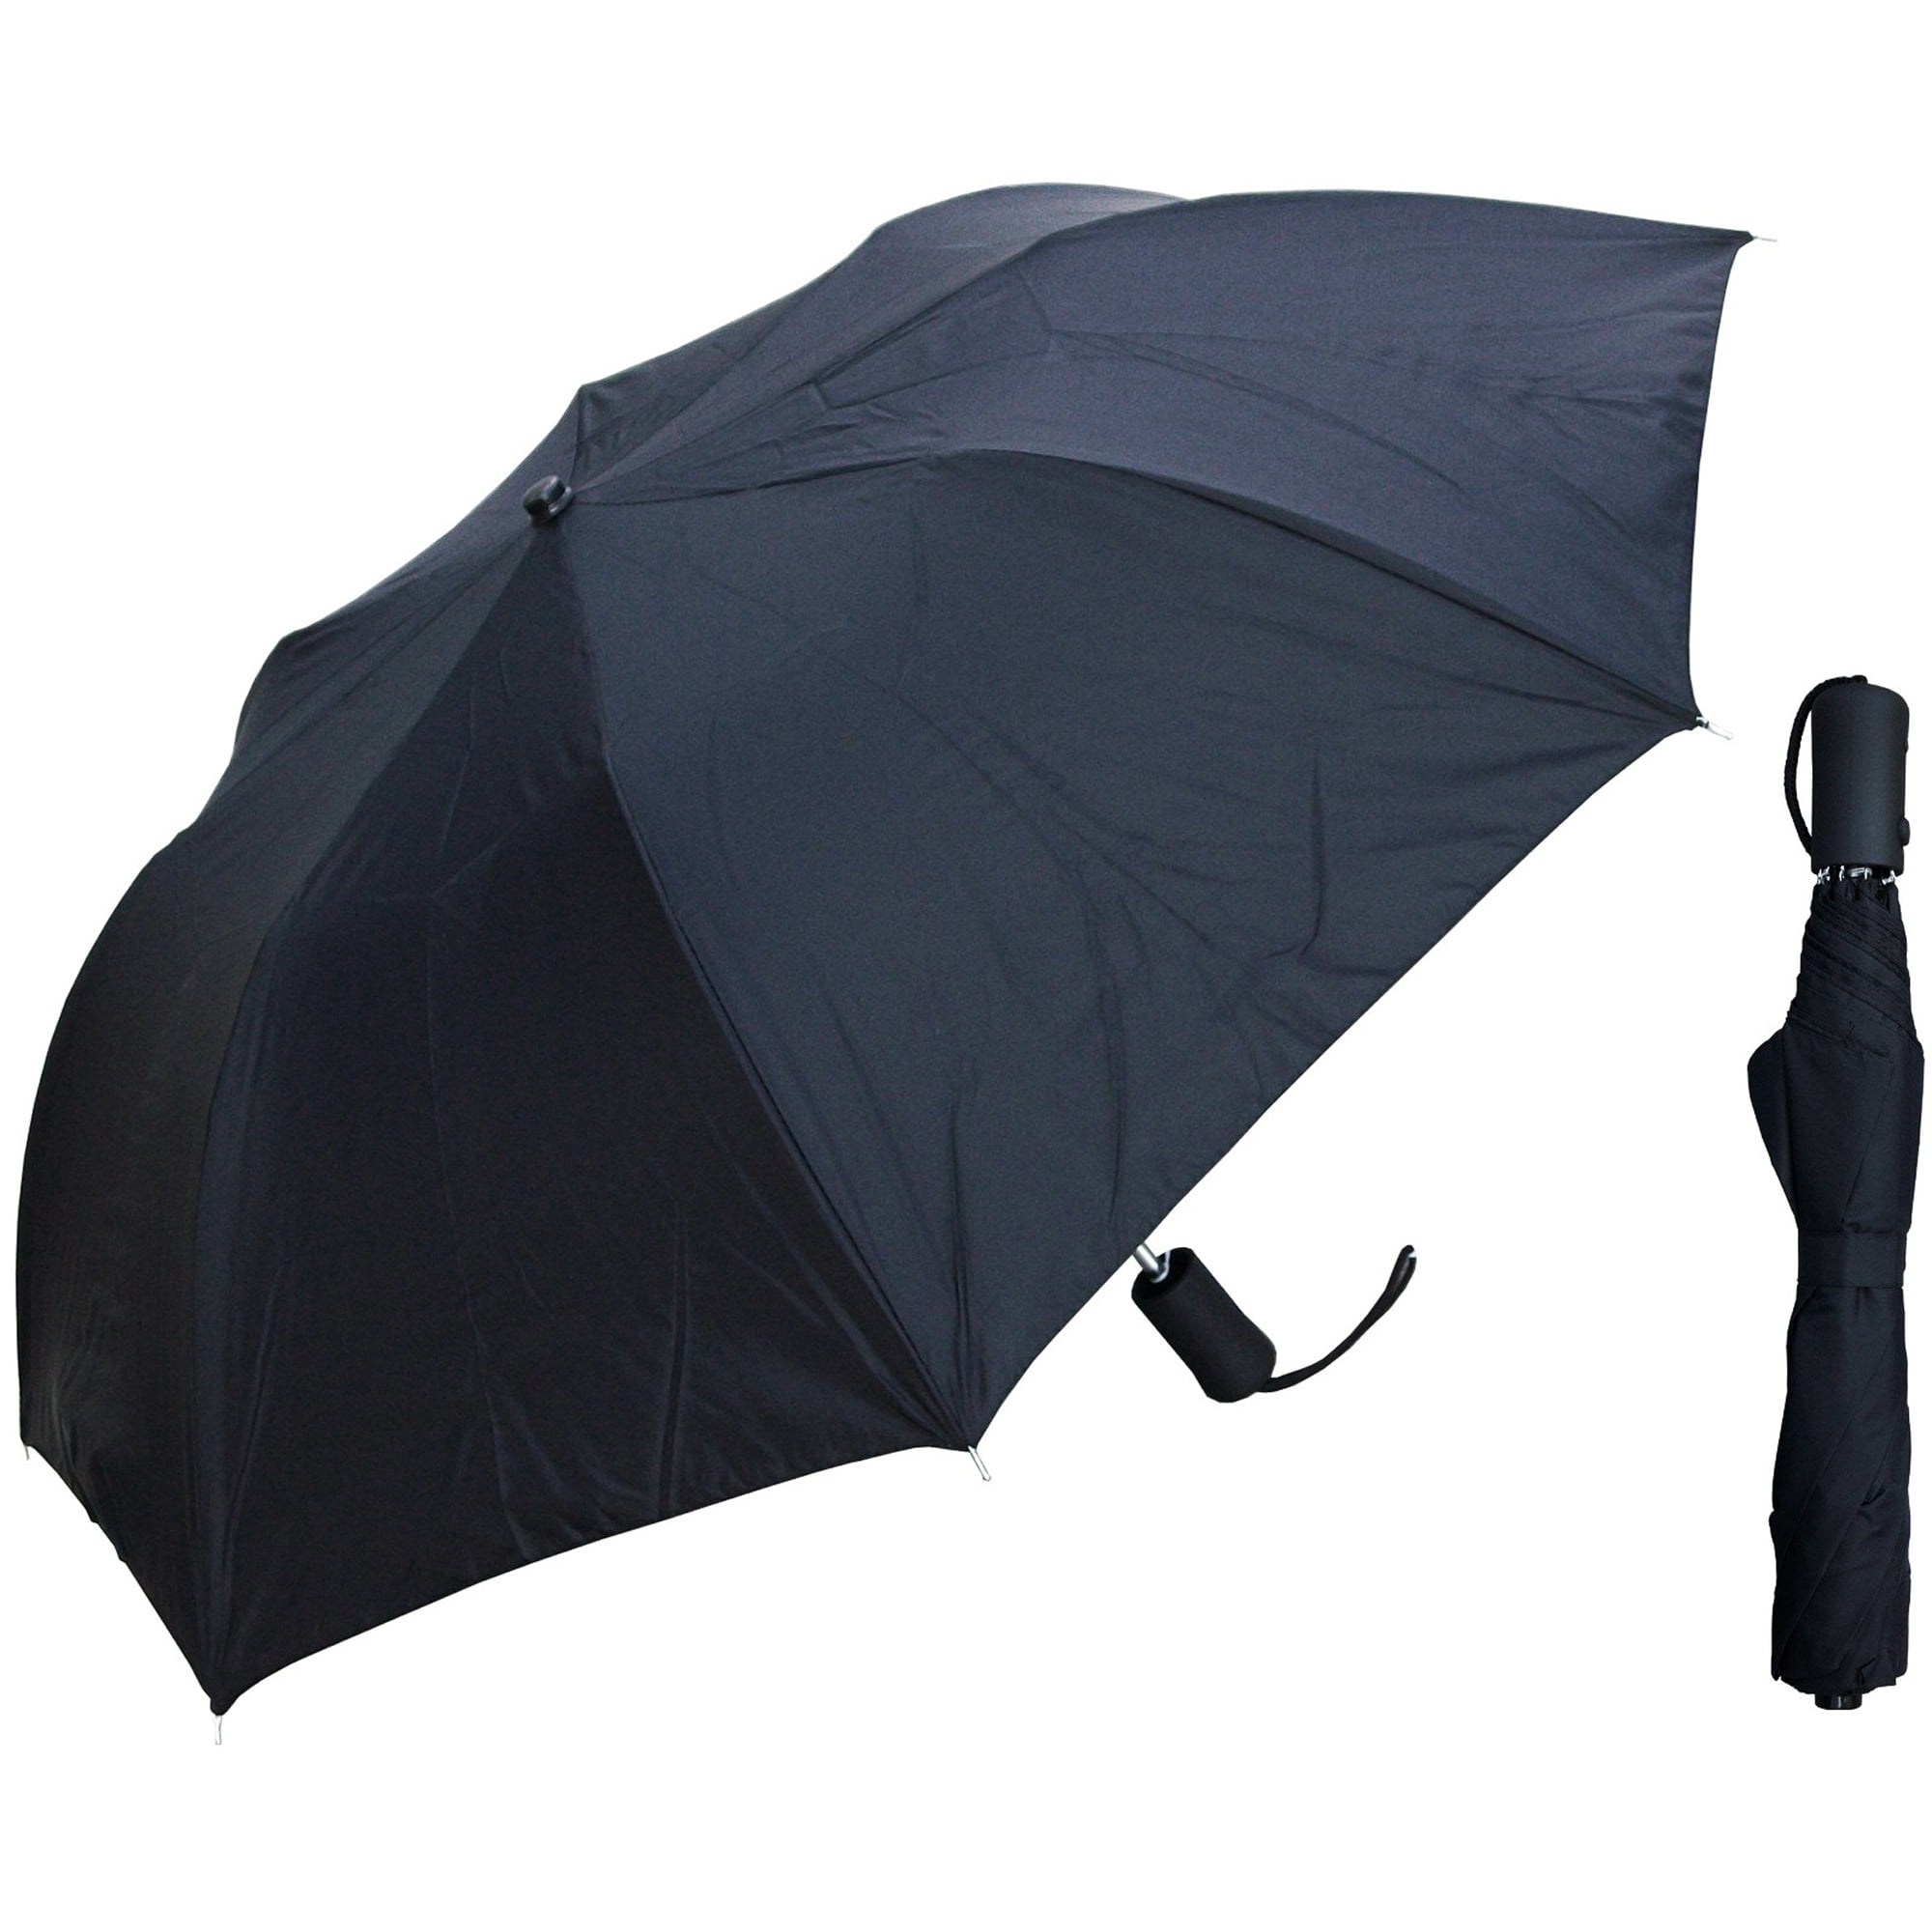 WeatherProof 42" Auto Open Auto Close Super Mini Solids Men's Umbrella